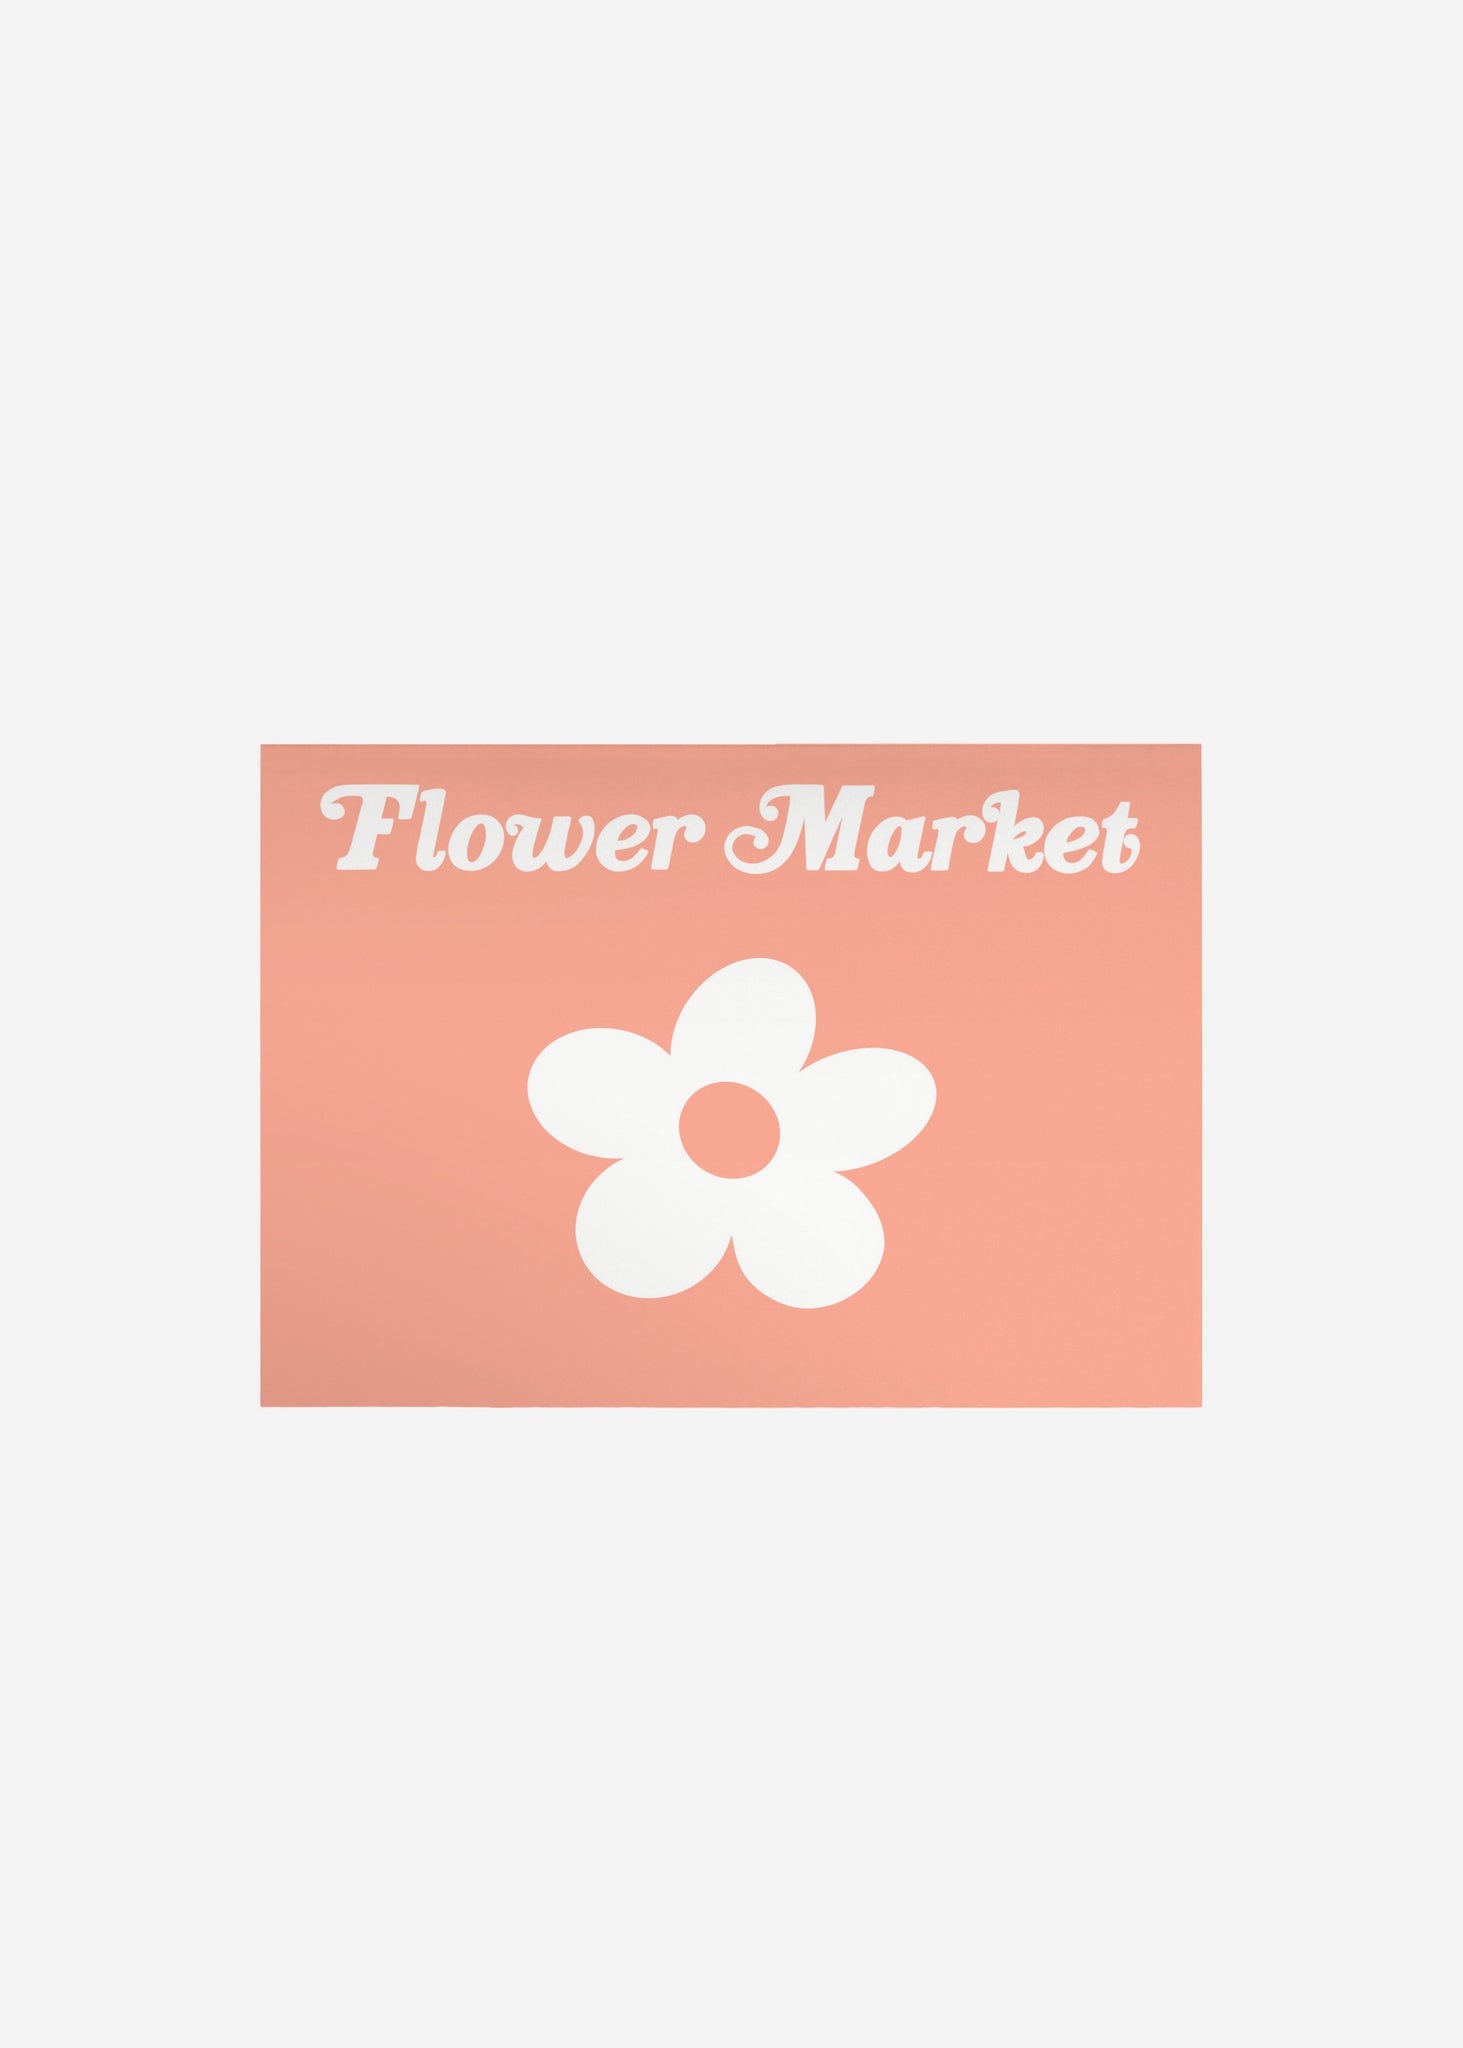 flower market sign Fine Art Print